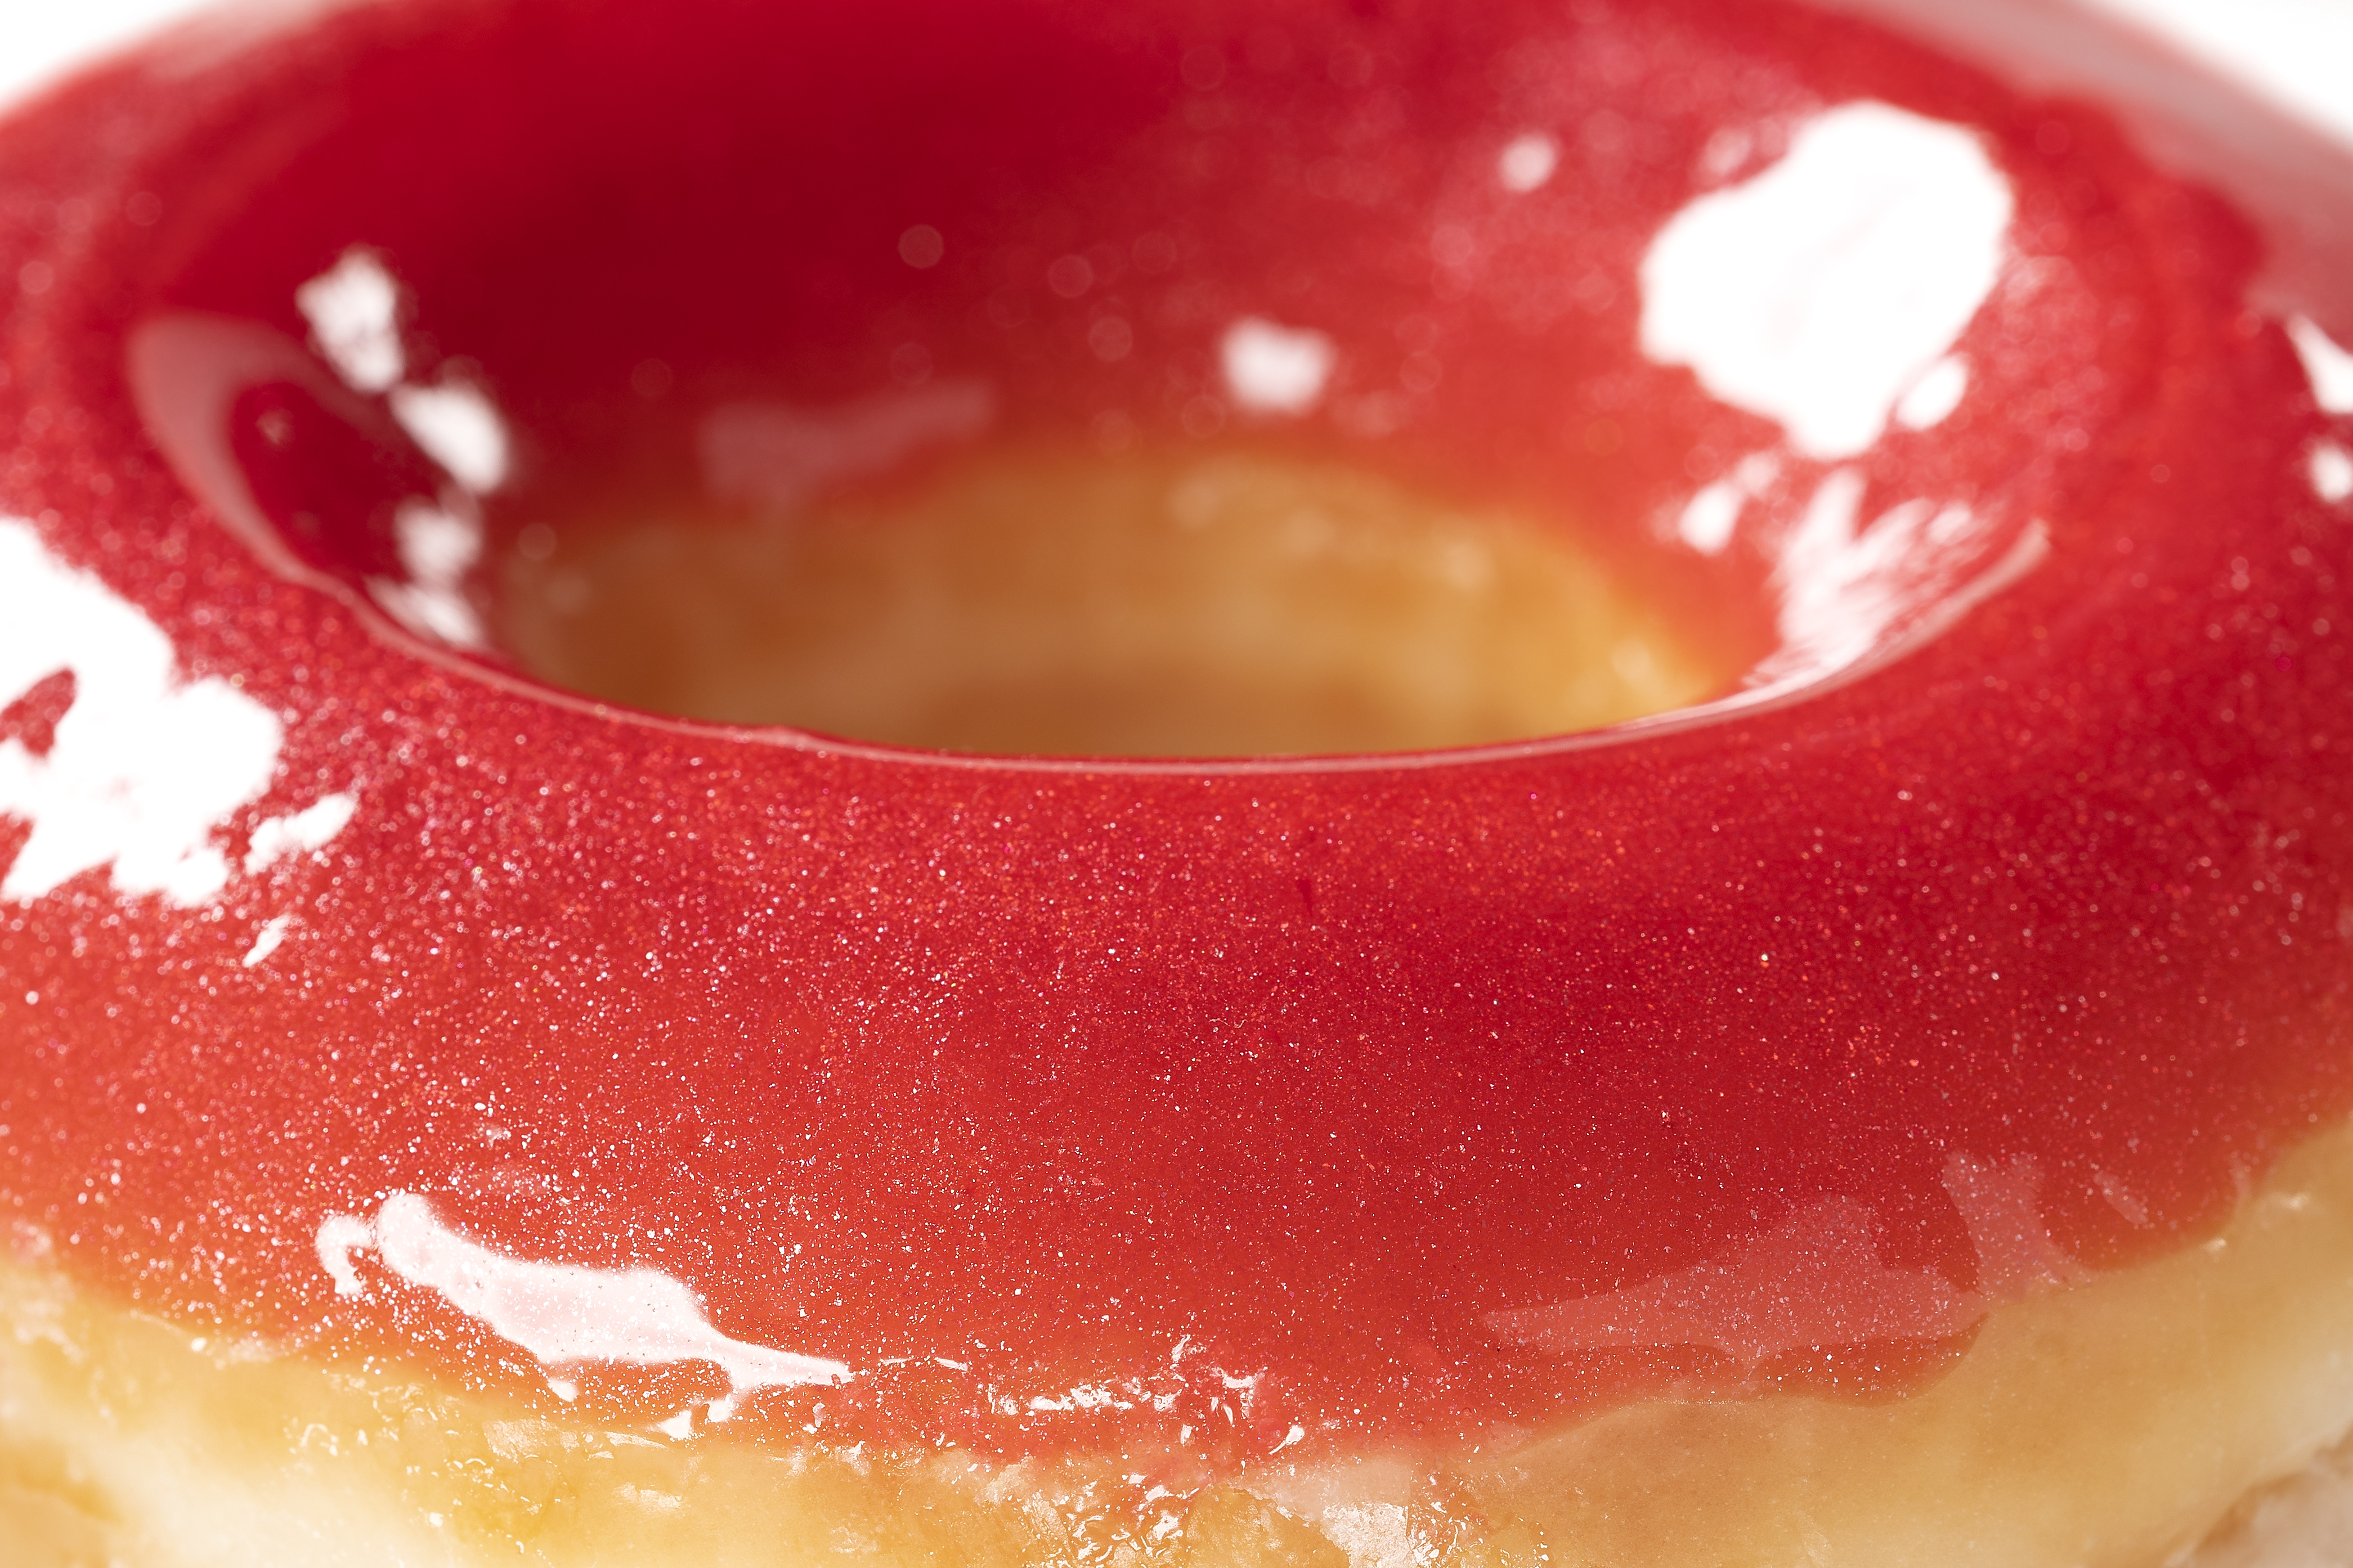 “Energy” glazed donut 